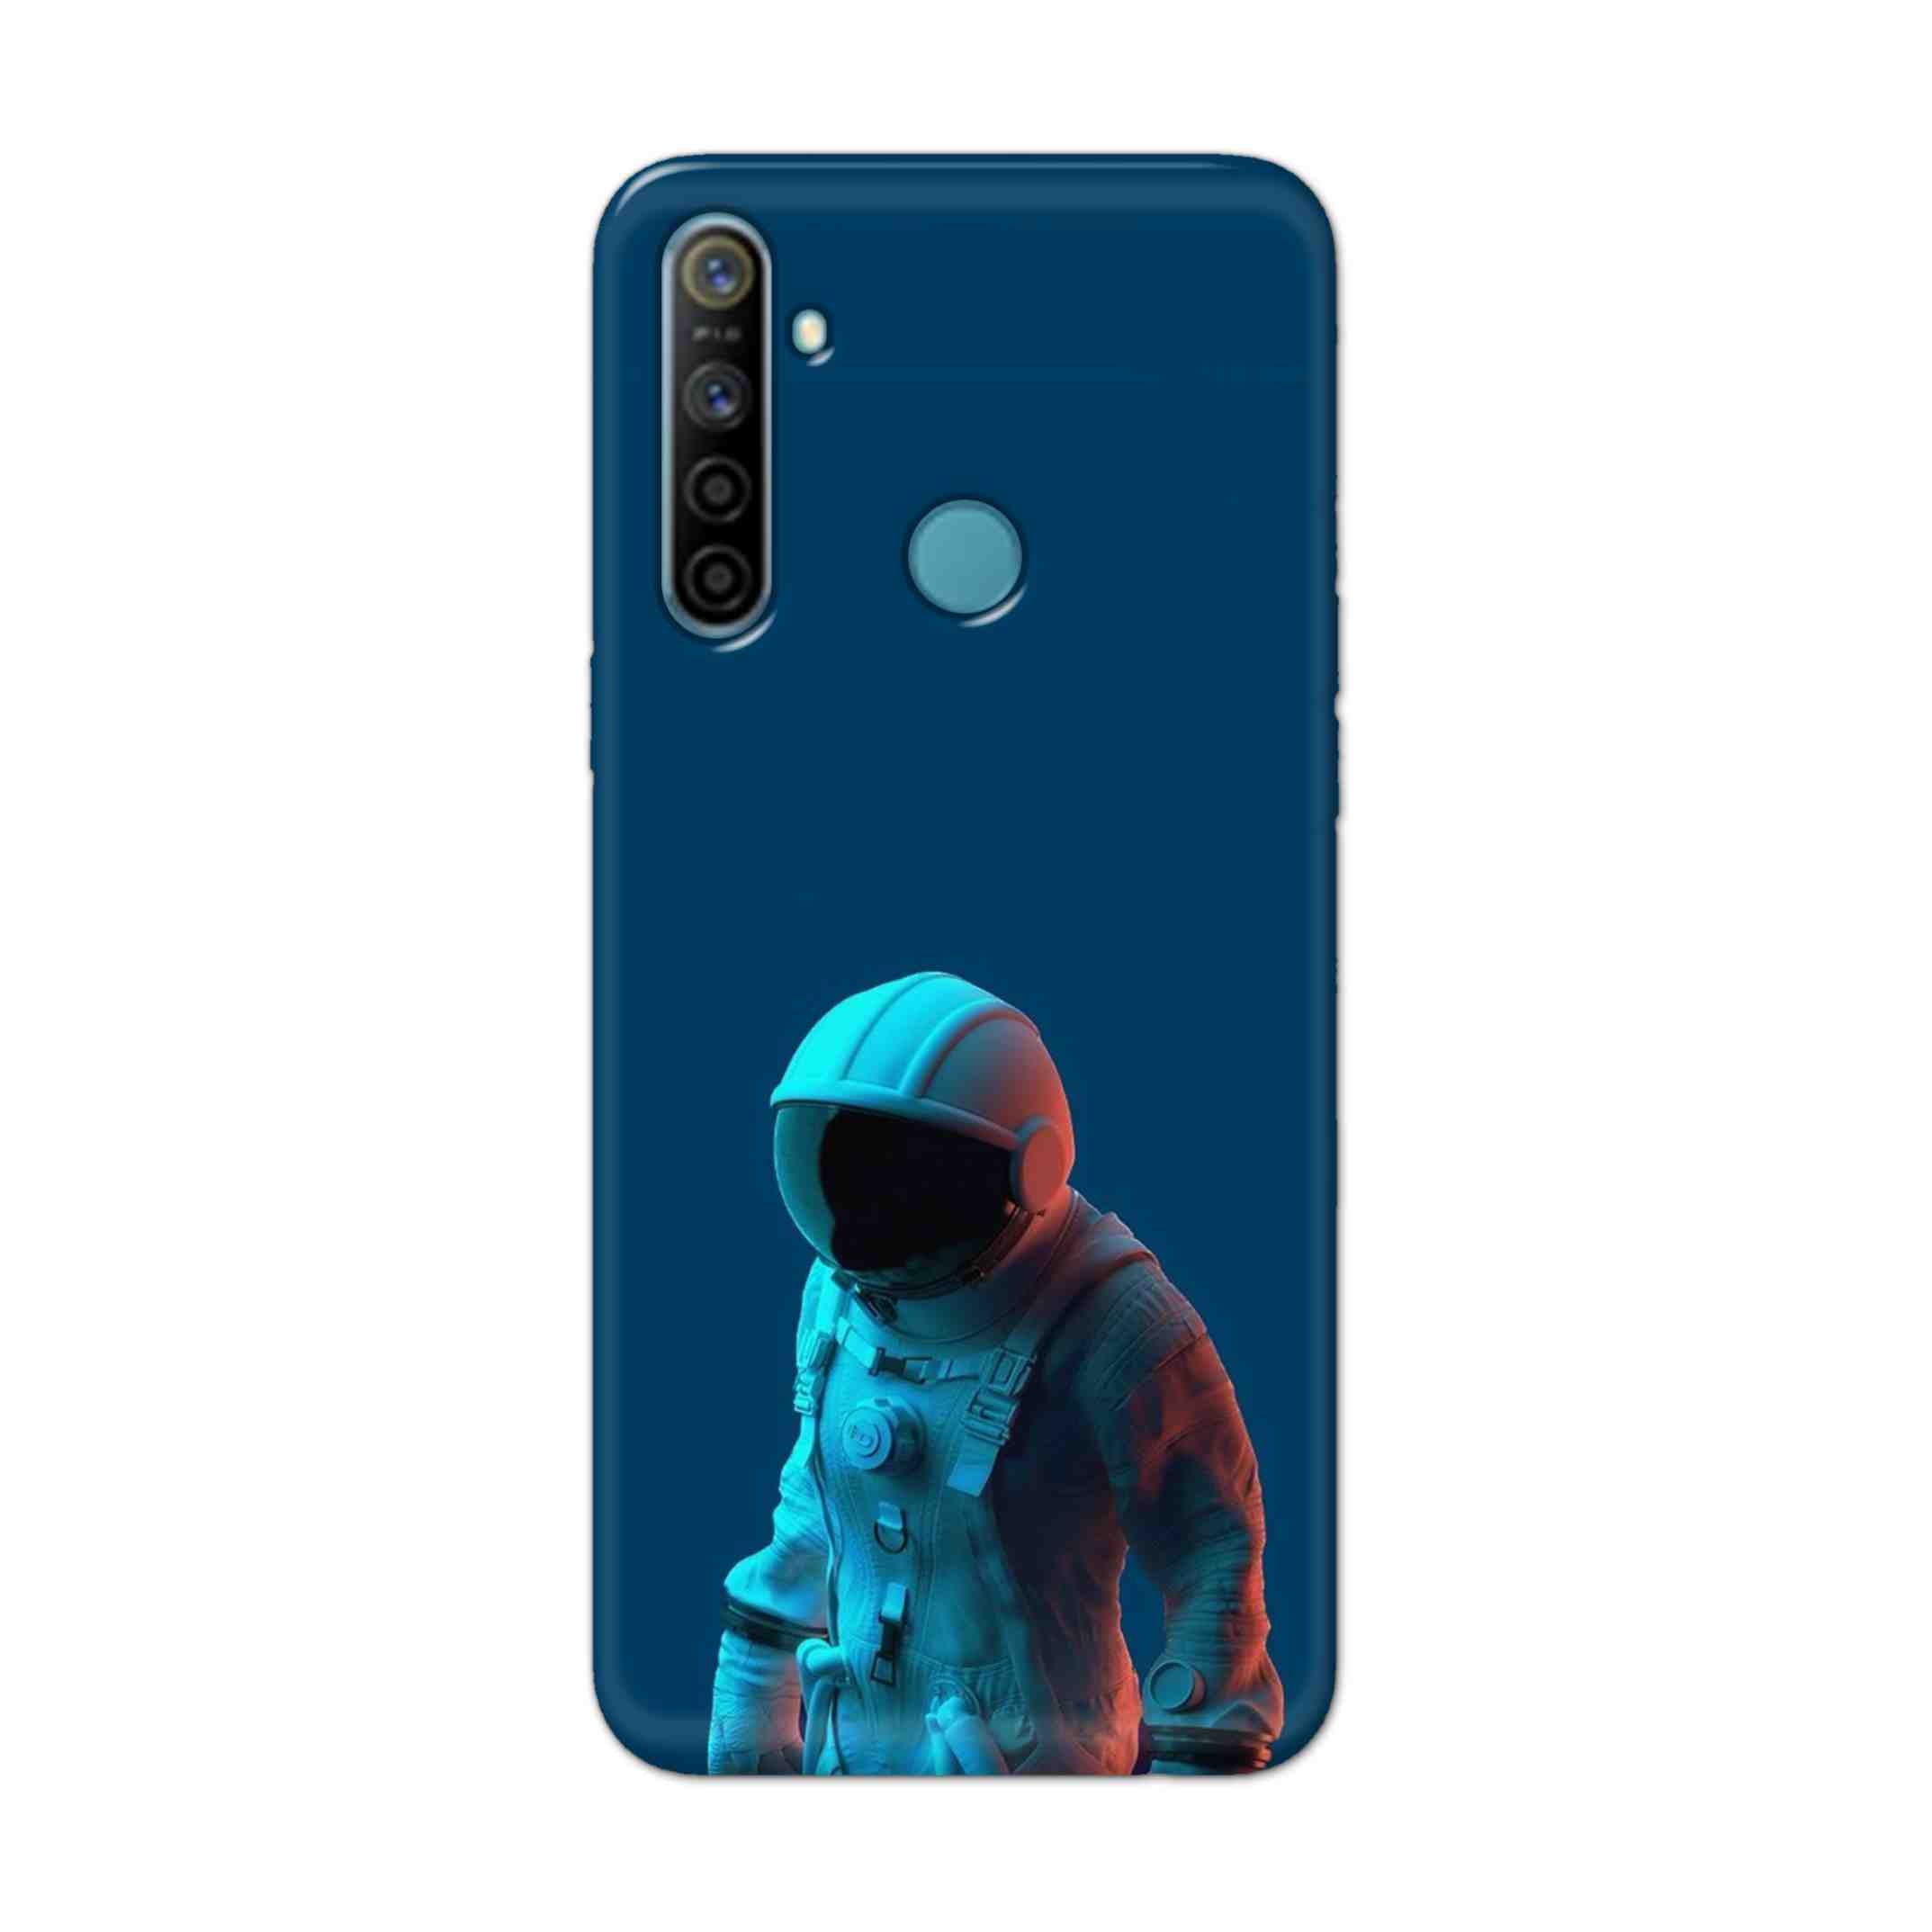 Buy Blue Astronaut Hard Back Mobile Phone Case Cover For Realme 5i Online